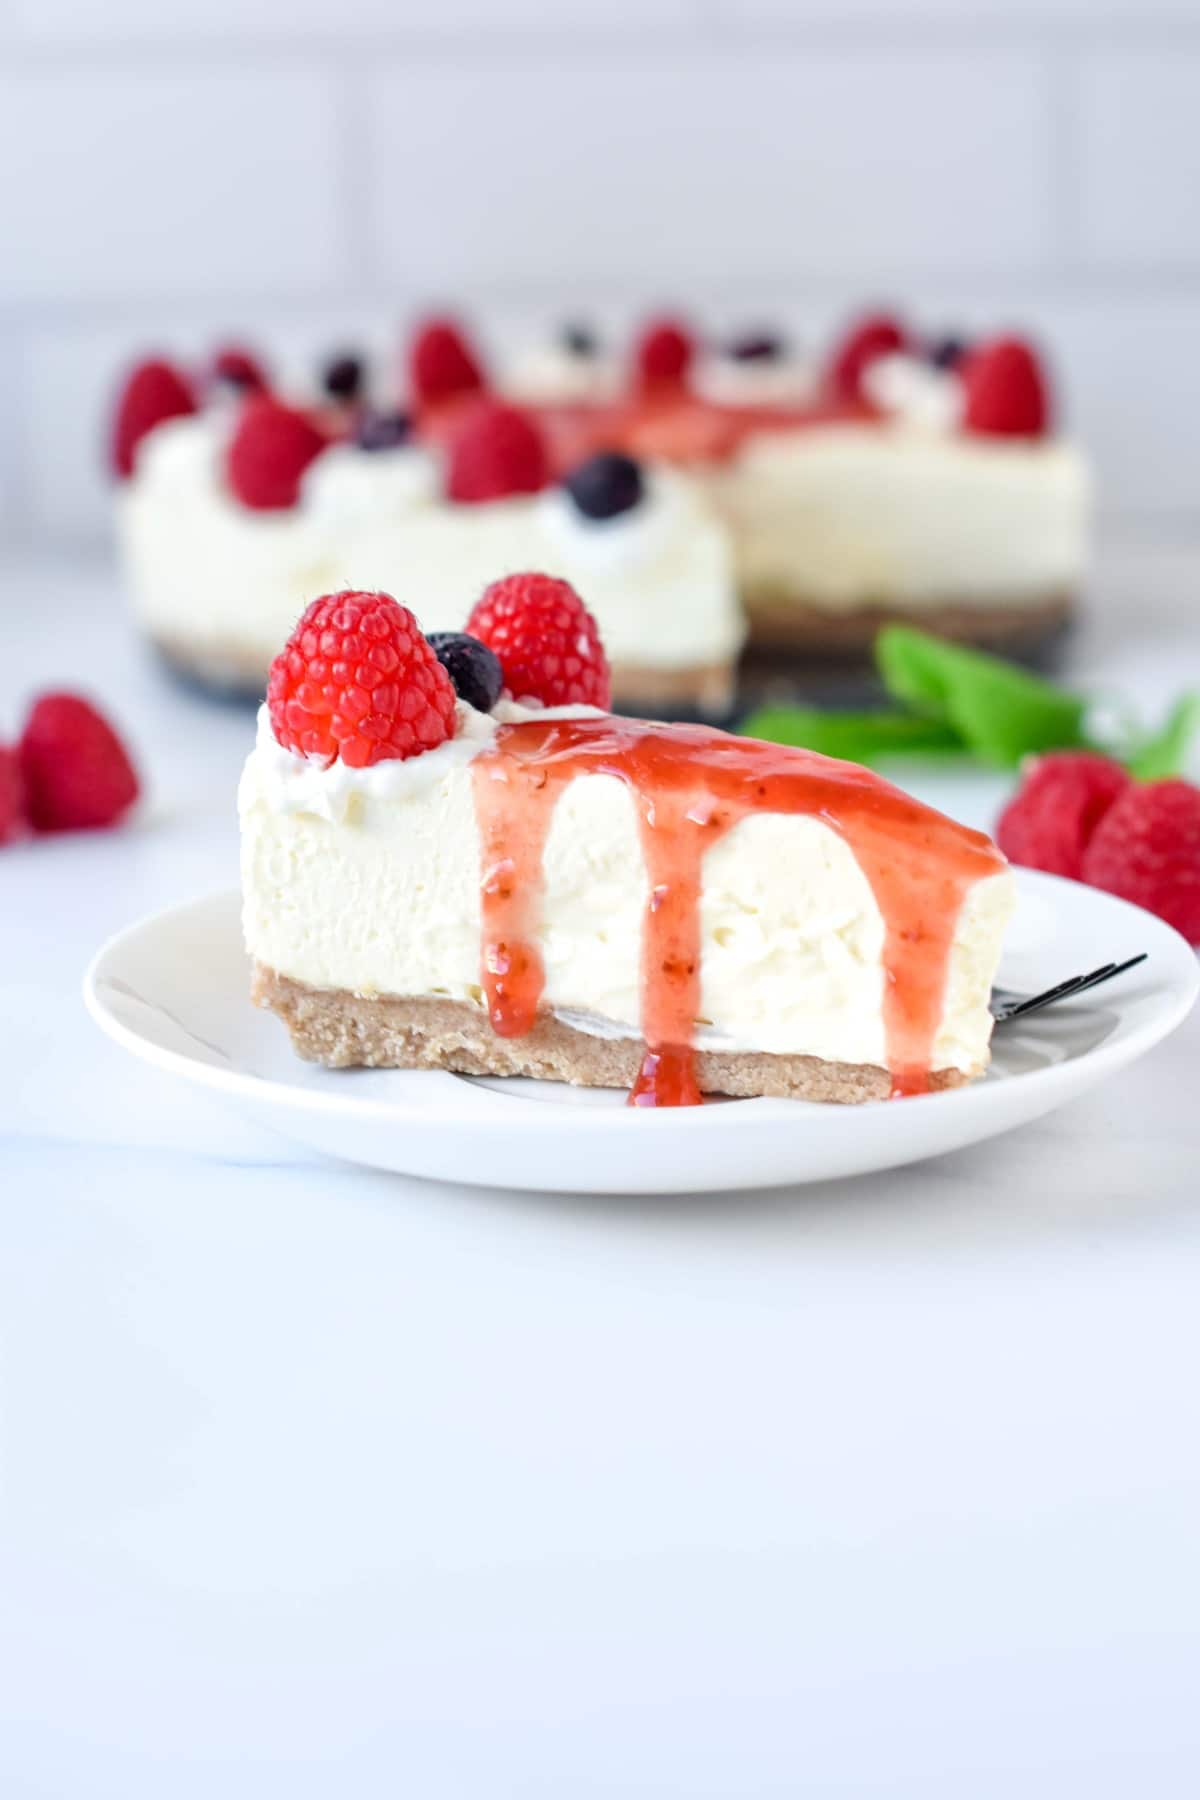 https://www.sweetashoney.co/wp-content/uploads/Keto-No-bake-Cheesecake-Recipe-from-the-Side.jpg